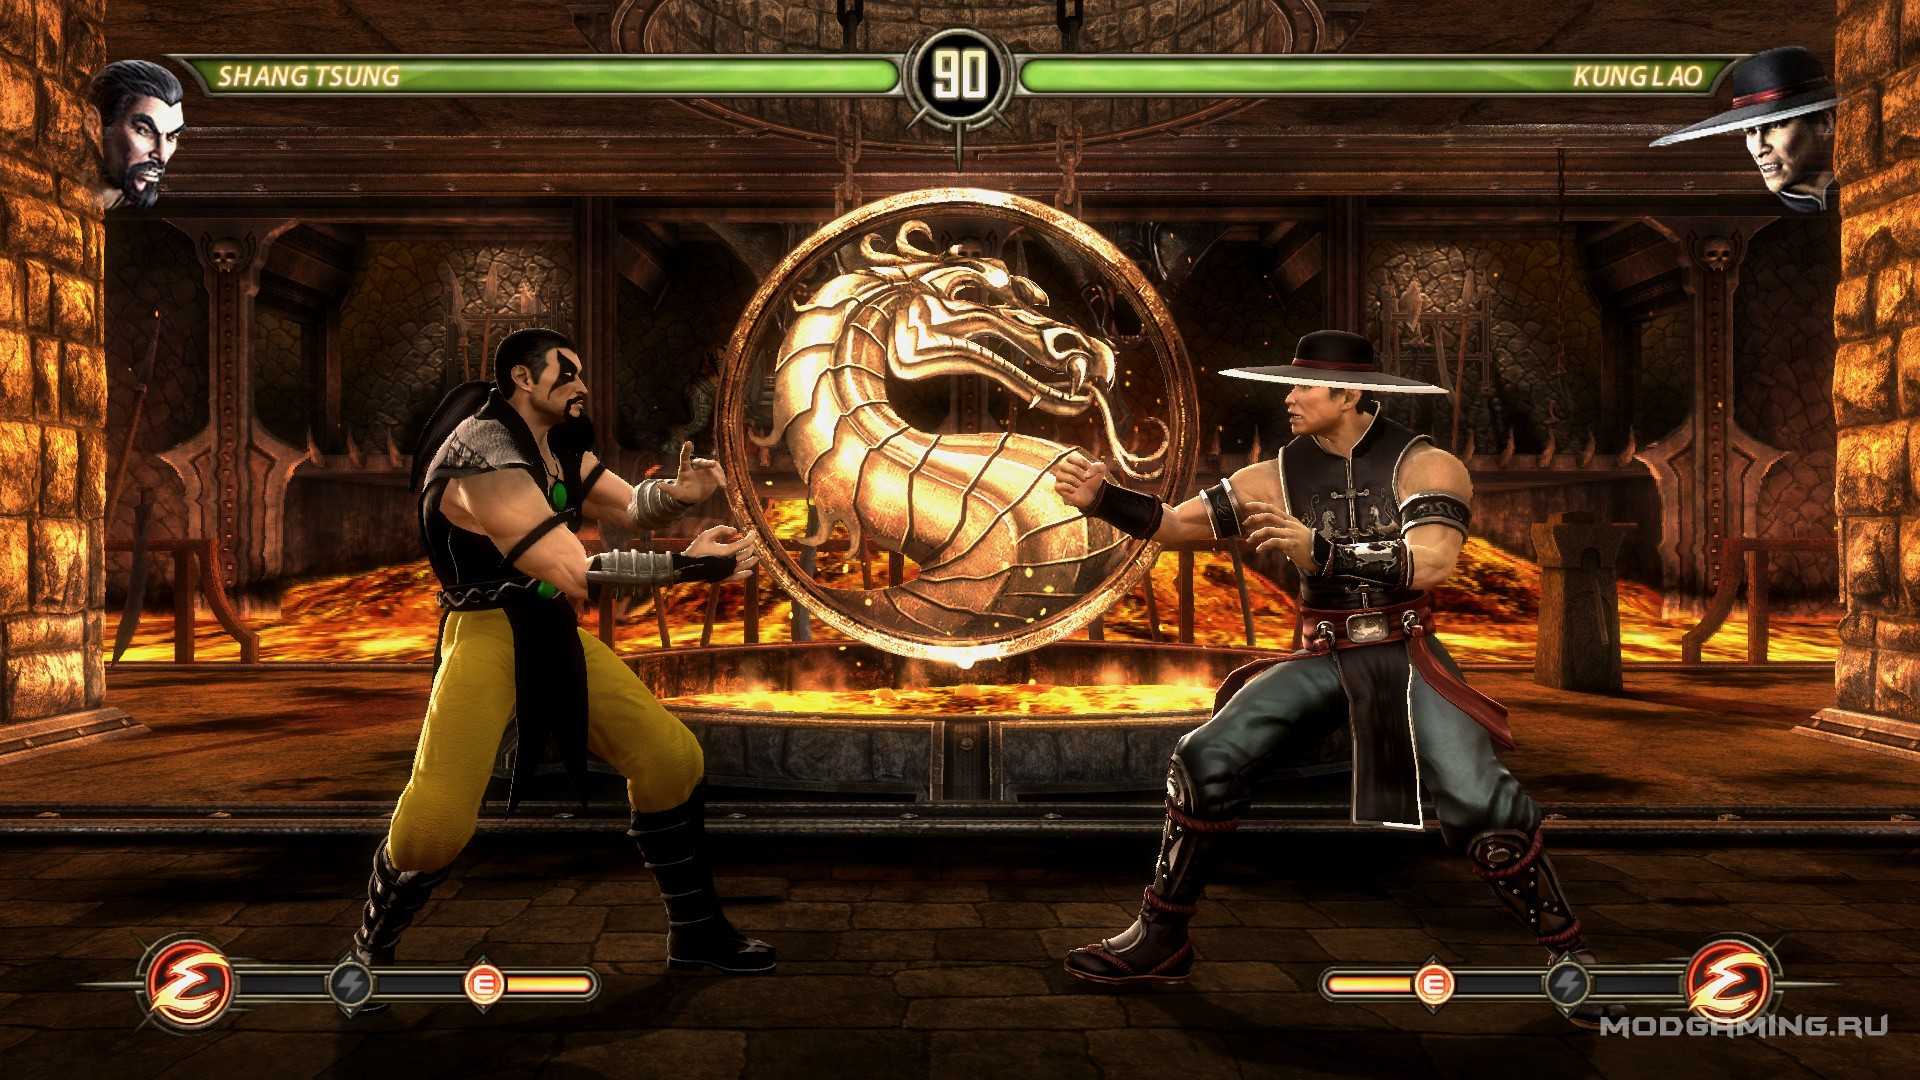 Мортал комбат мобайл 5.3 0. Шанг Цунг мортал комбат 3. Игра мортал комбат игра мортал комбат. Mortal Mortal Kombat 3 Shang Tsung. Mortal Kombat 2002.